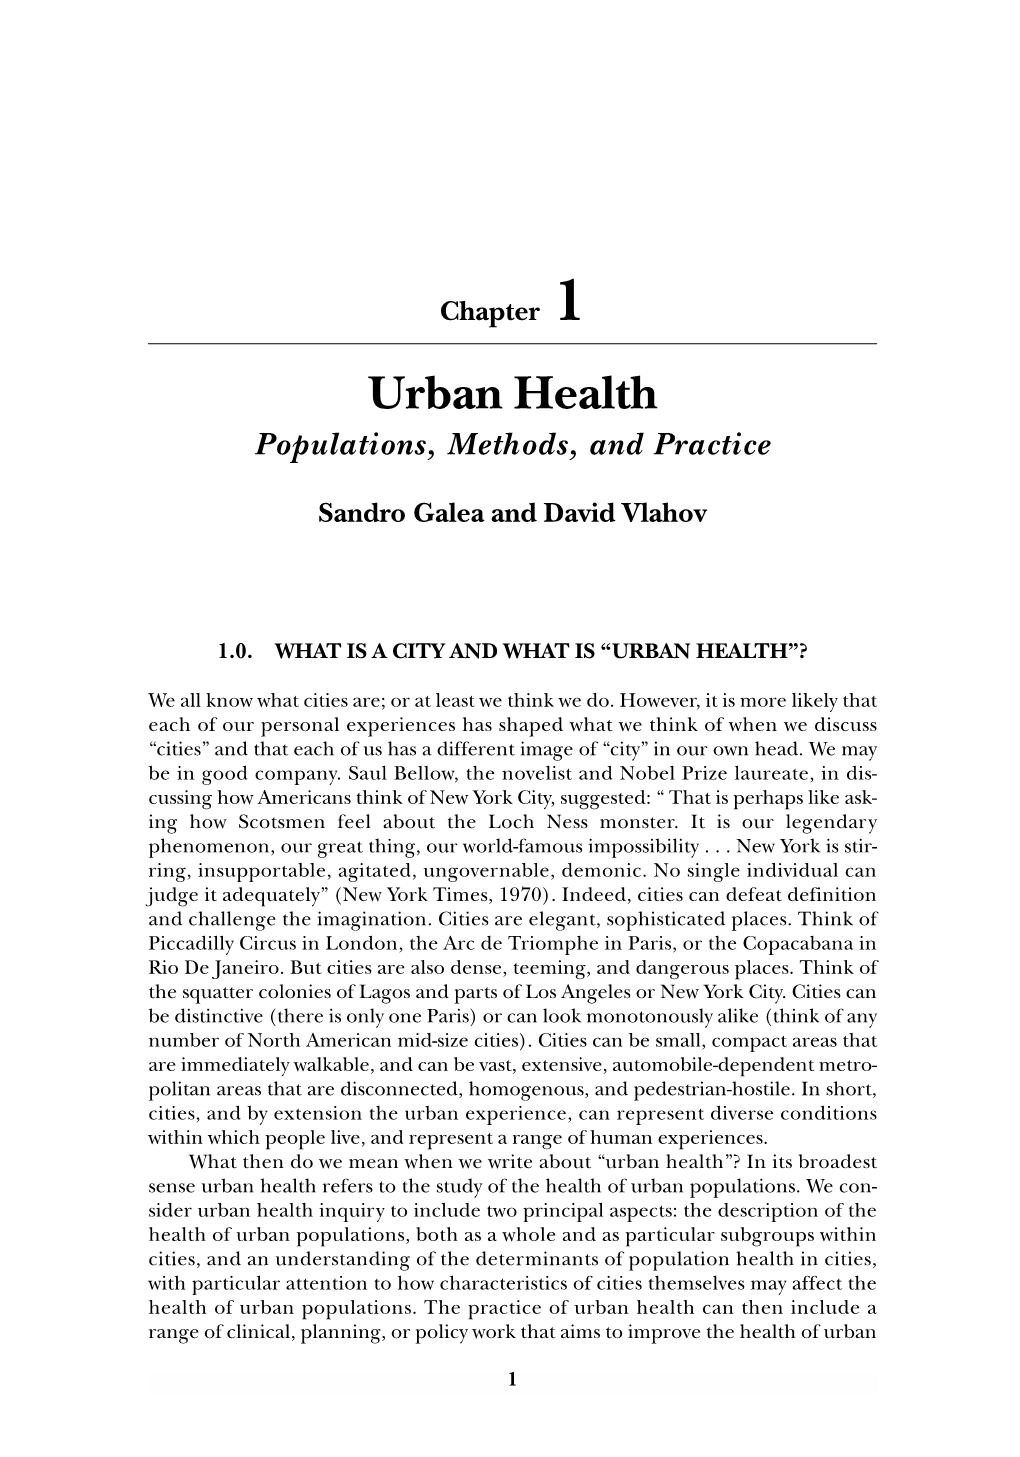 Urban Health Populations, Methods, and Practice